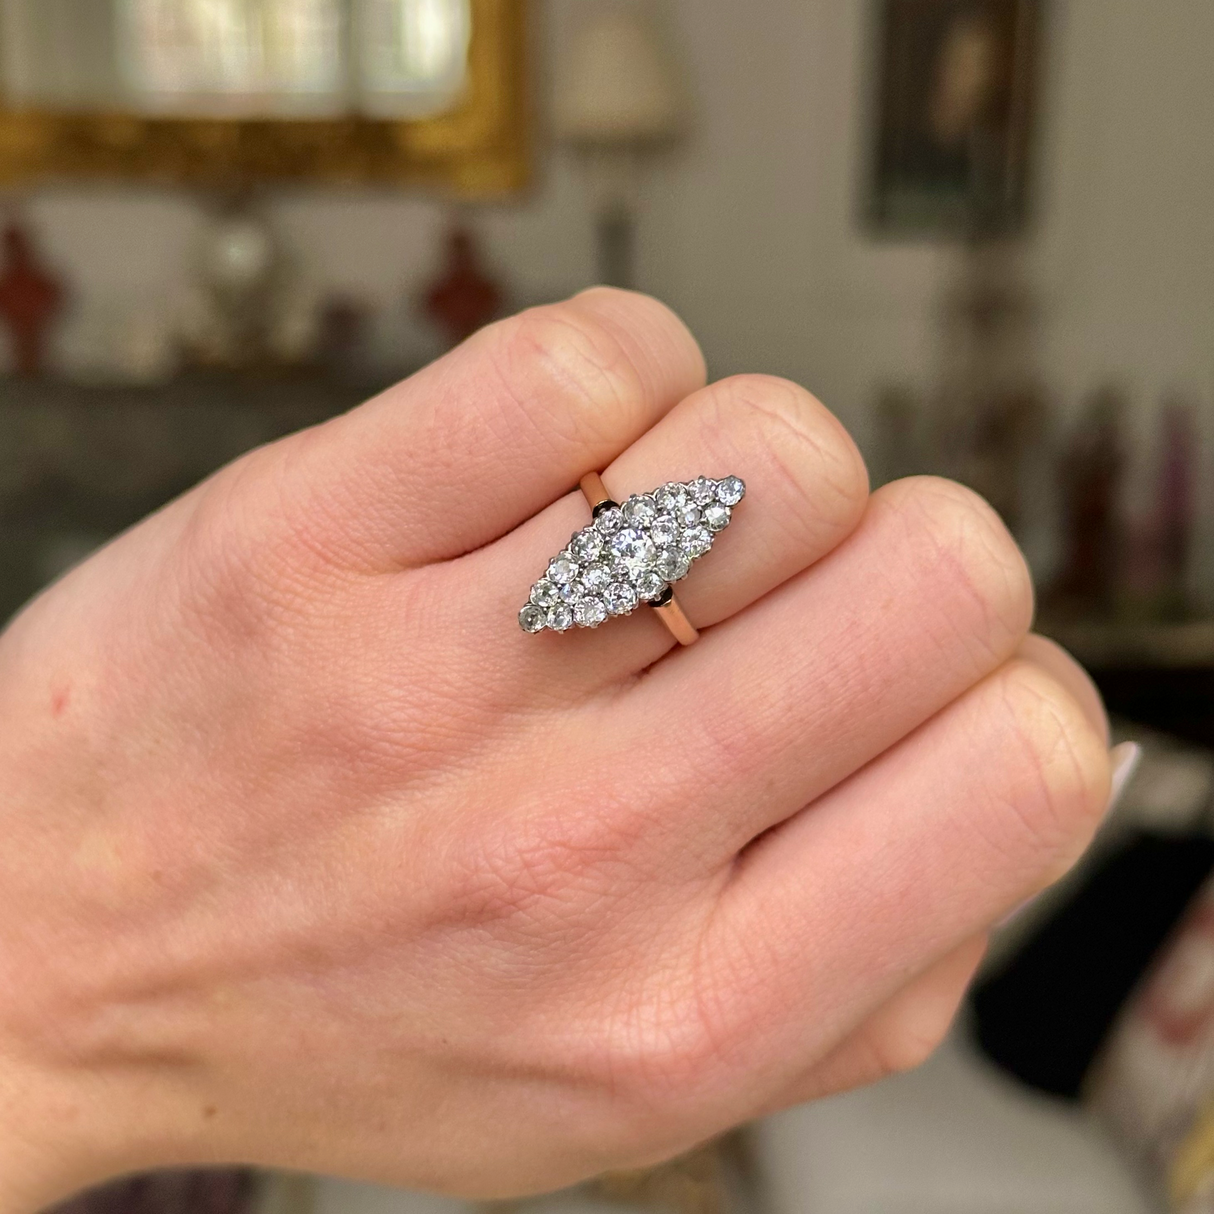 Antique diamond navette ring worn on closed hand. 